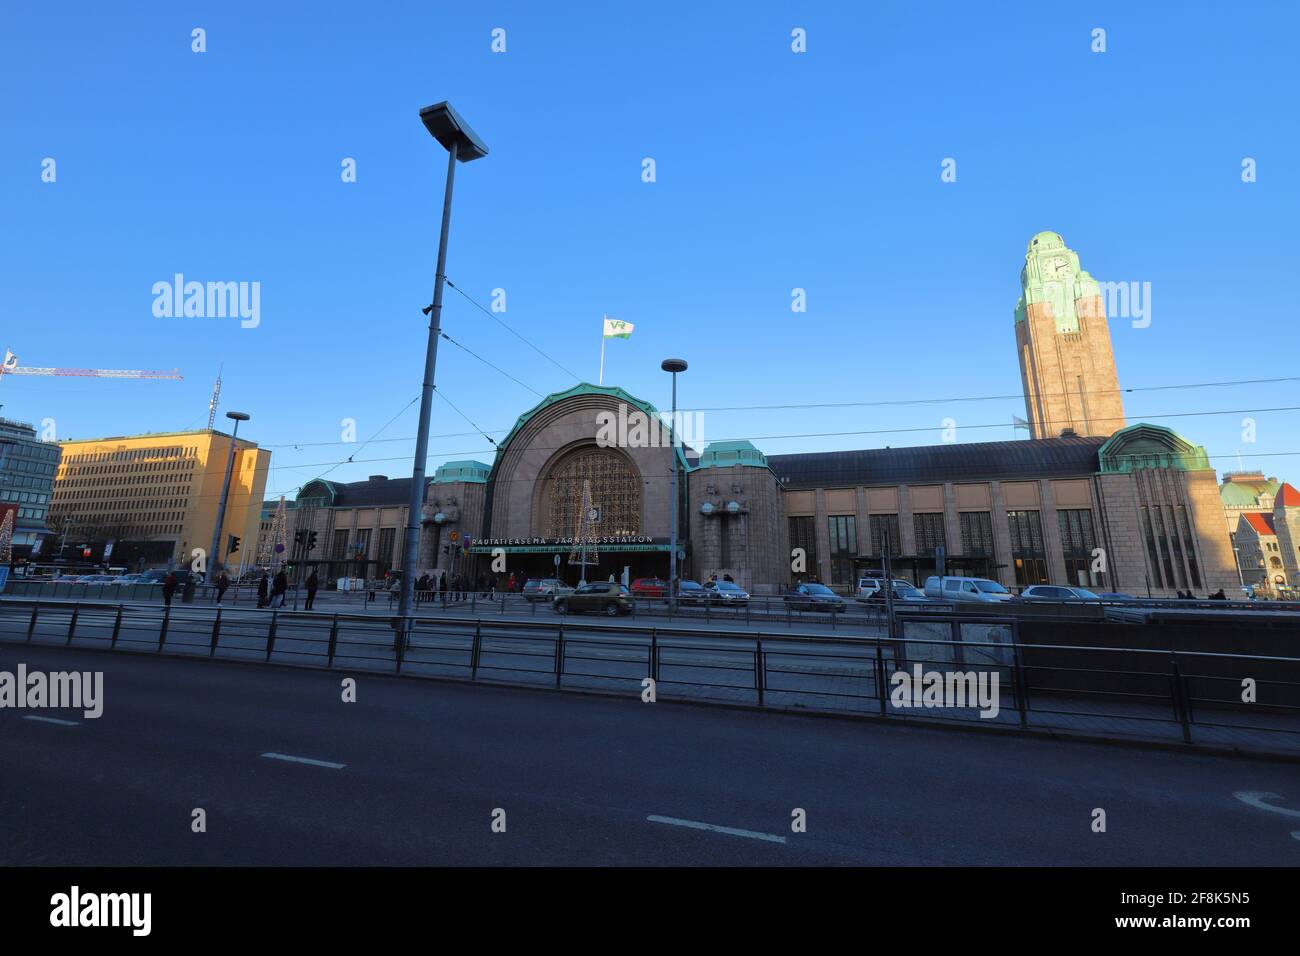 FINNLAND, HELSINKI - 04. JANUAR 2020: Helsinki Central Station Stockfoto